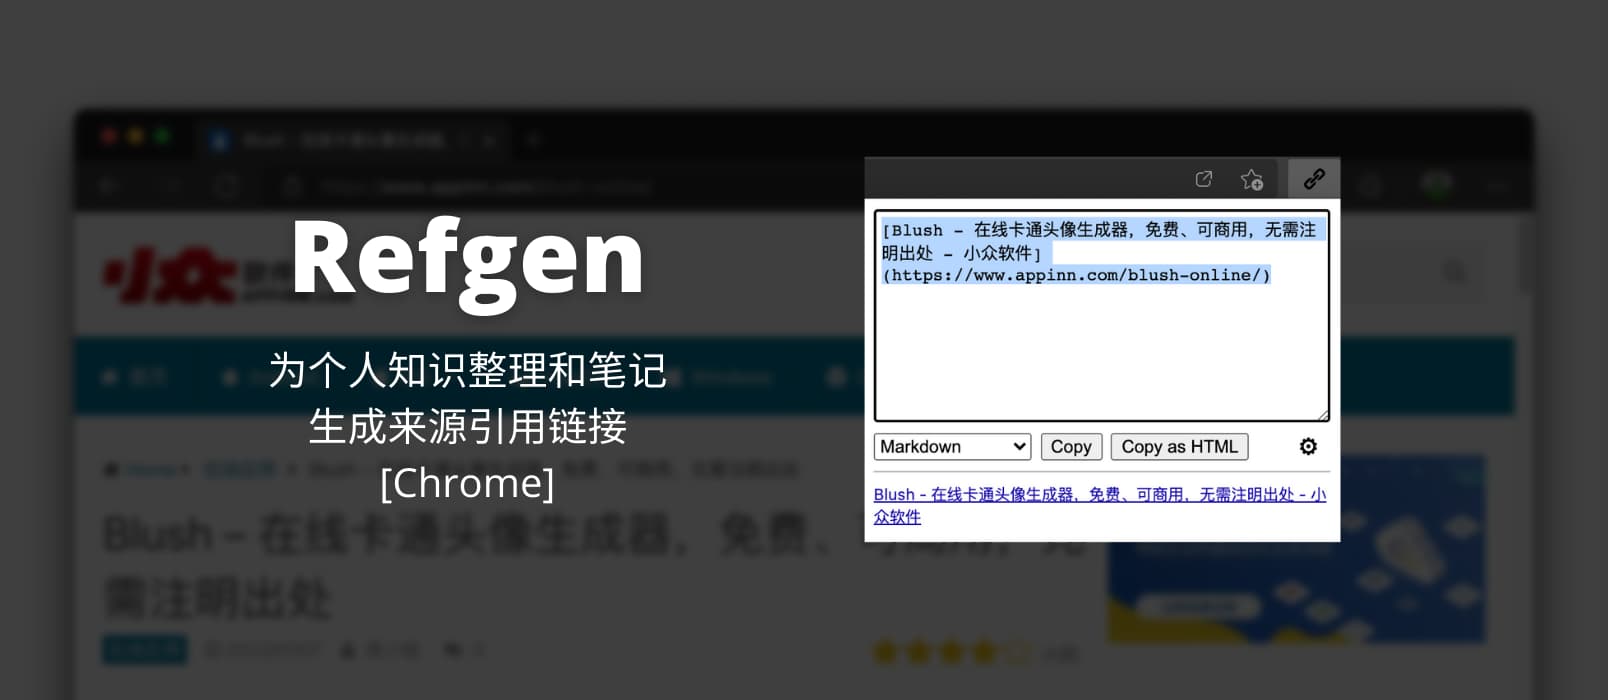 Refgen - 为个人知识整理和笔记生成来源引用链接[Chrome]